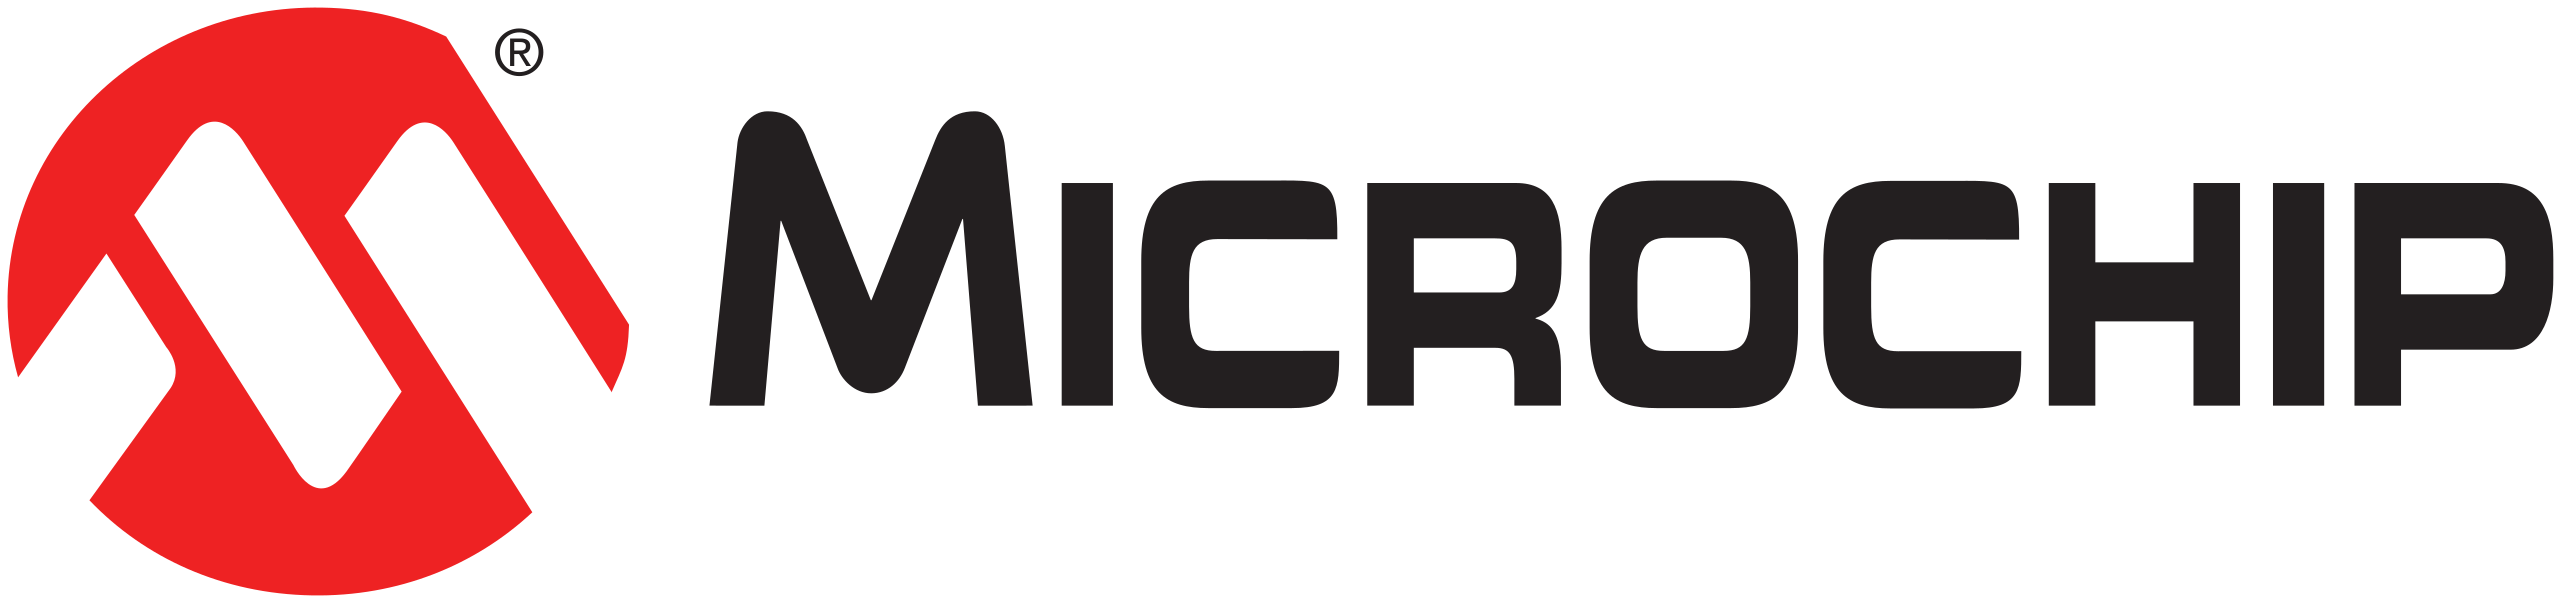 Microchip-Logo